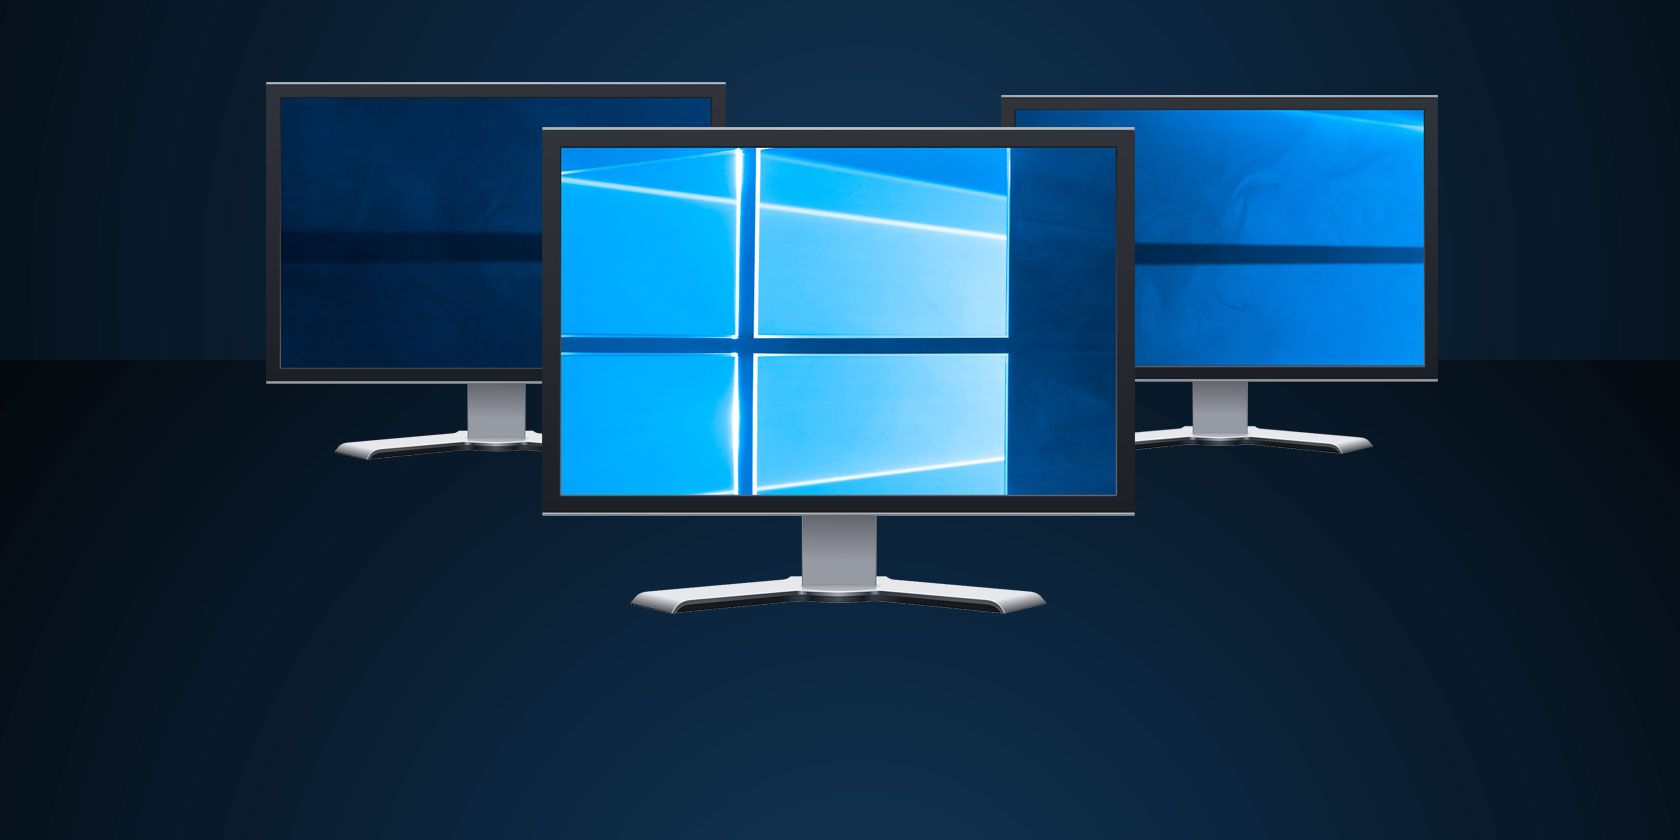 windows 10 task view multiple monitors